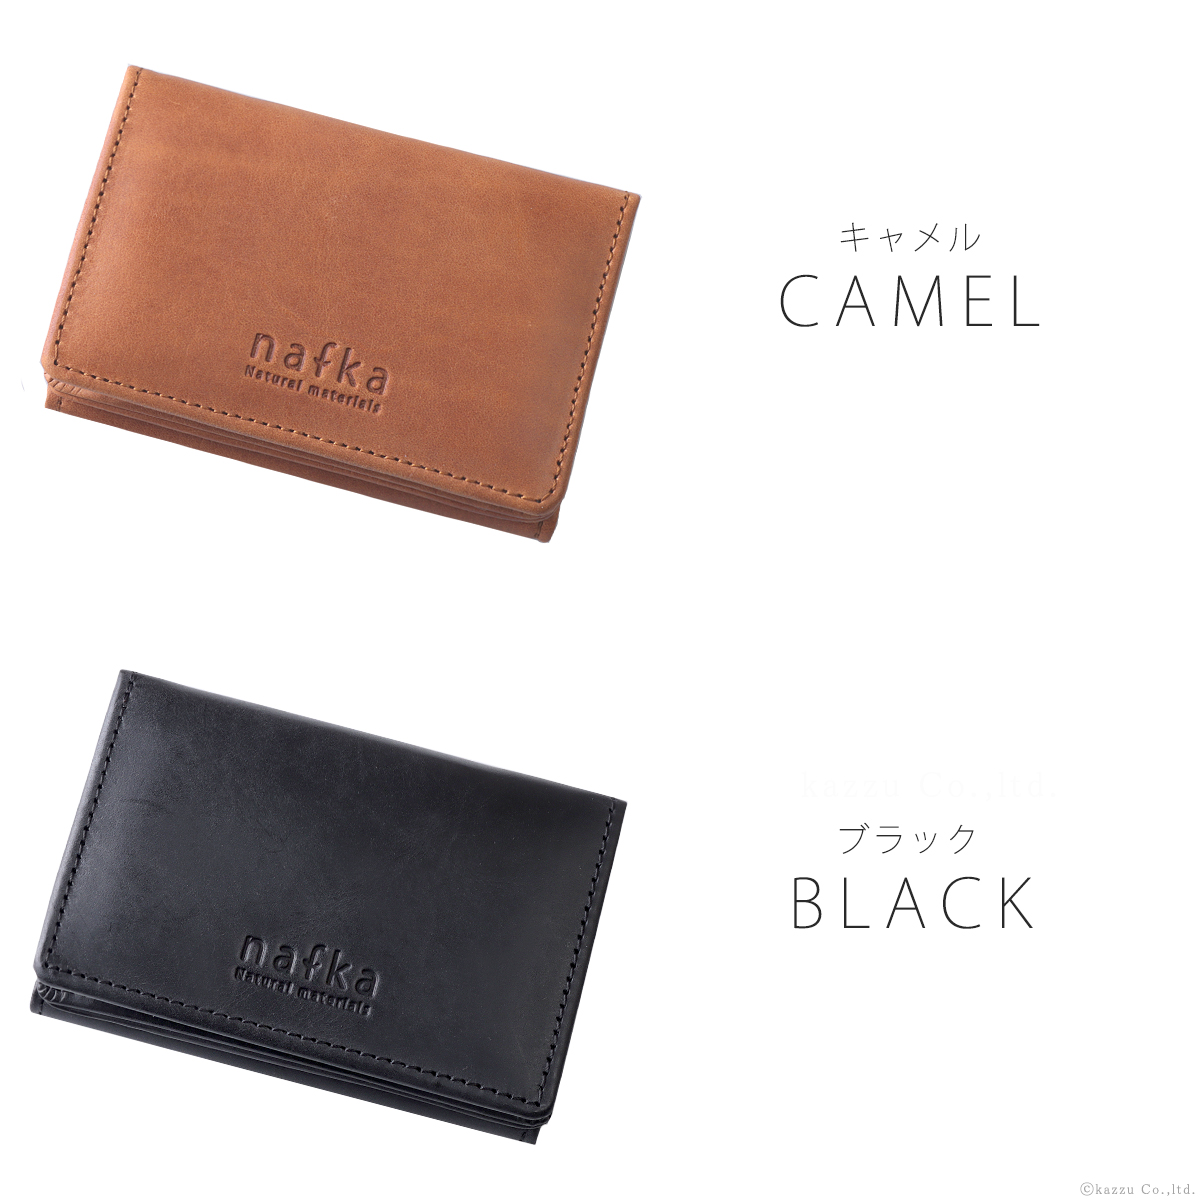 nafkaの三つ折り財布は定番なカラーをご用意しています